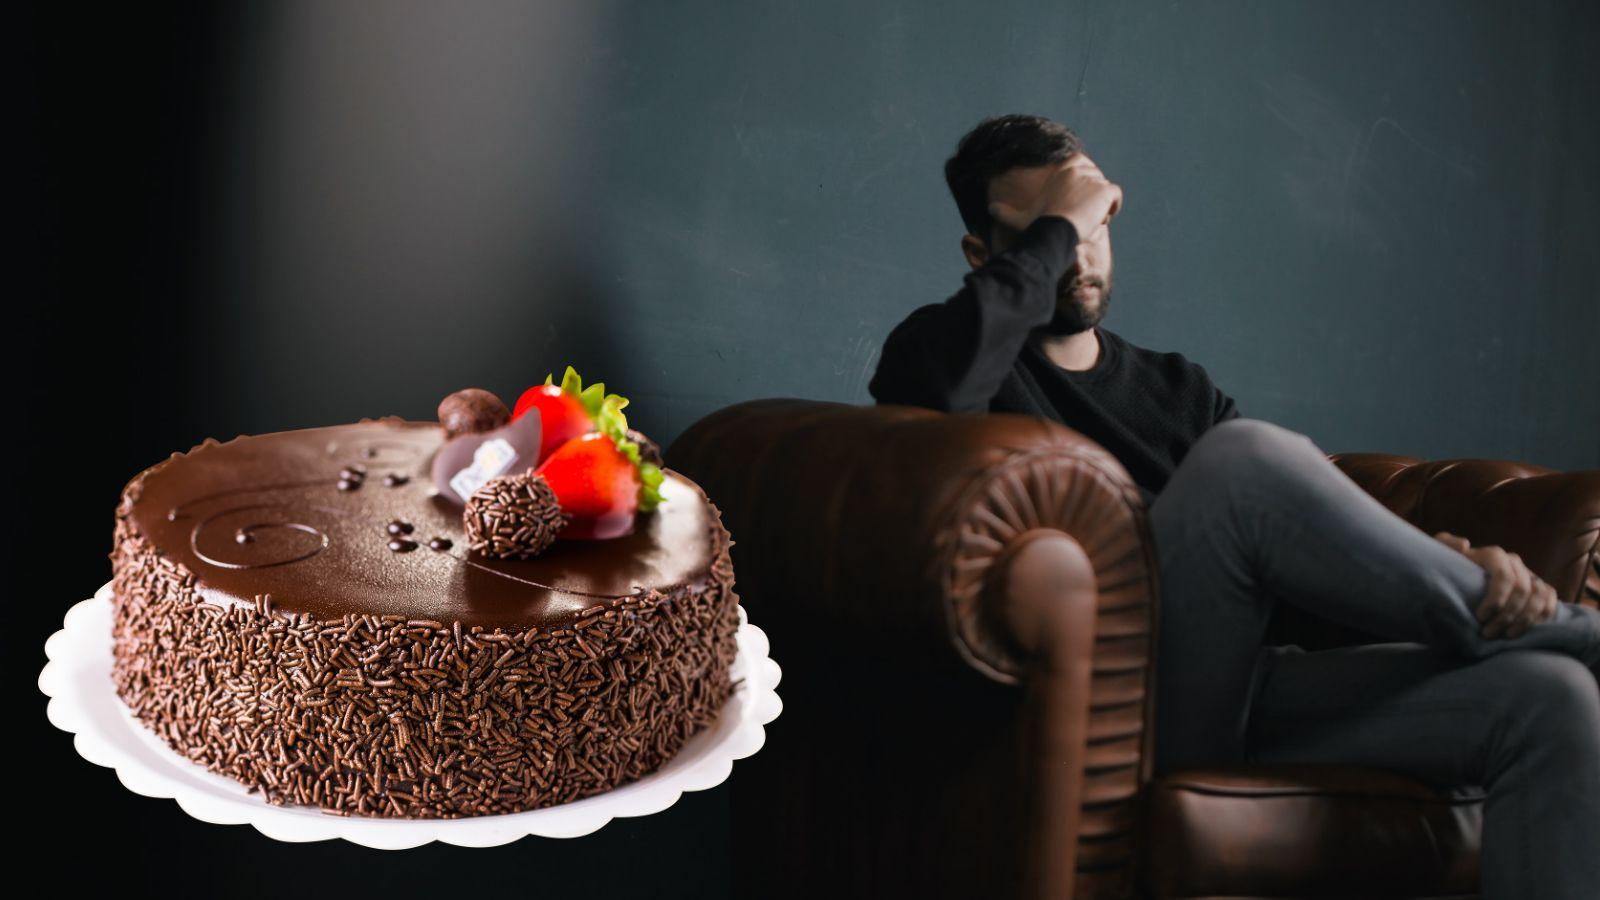 Man upset over birthday cake